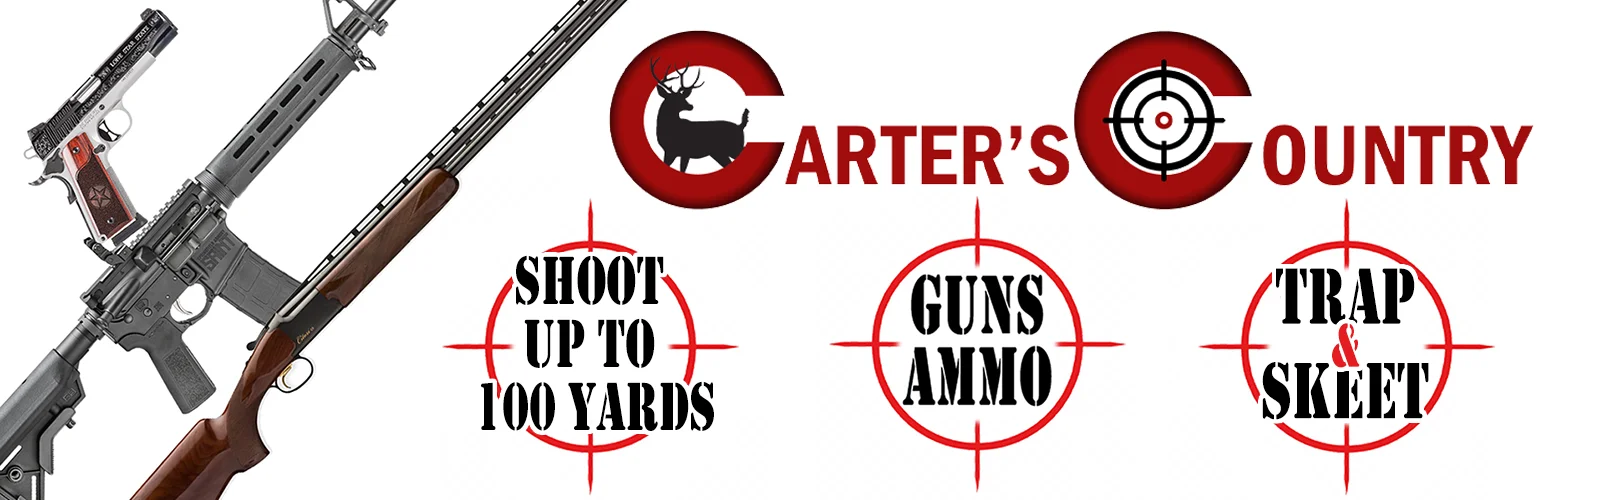 Carters Country - Shoot, Guns, Ammo, Trap, Skeet